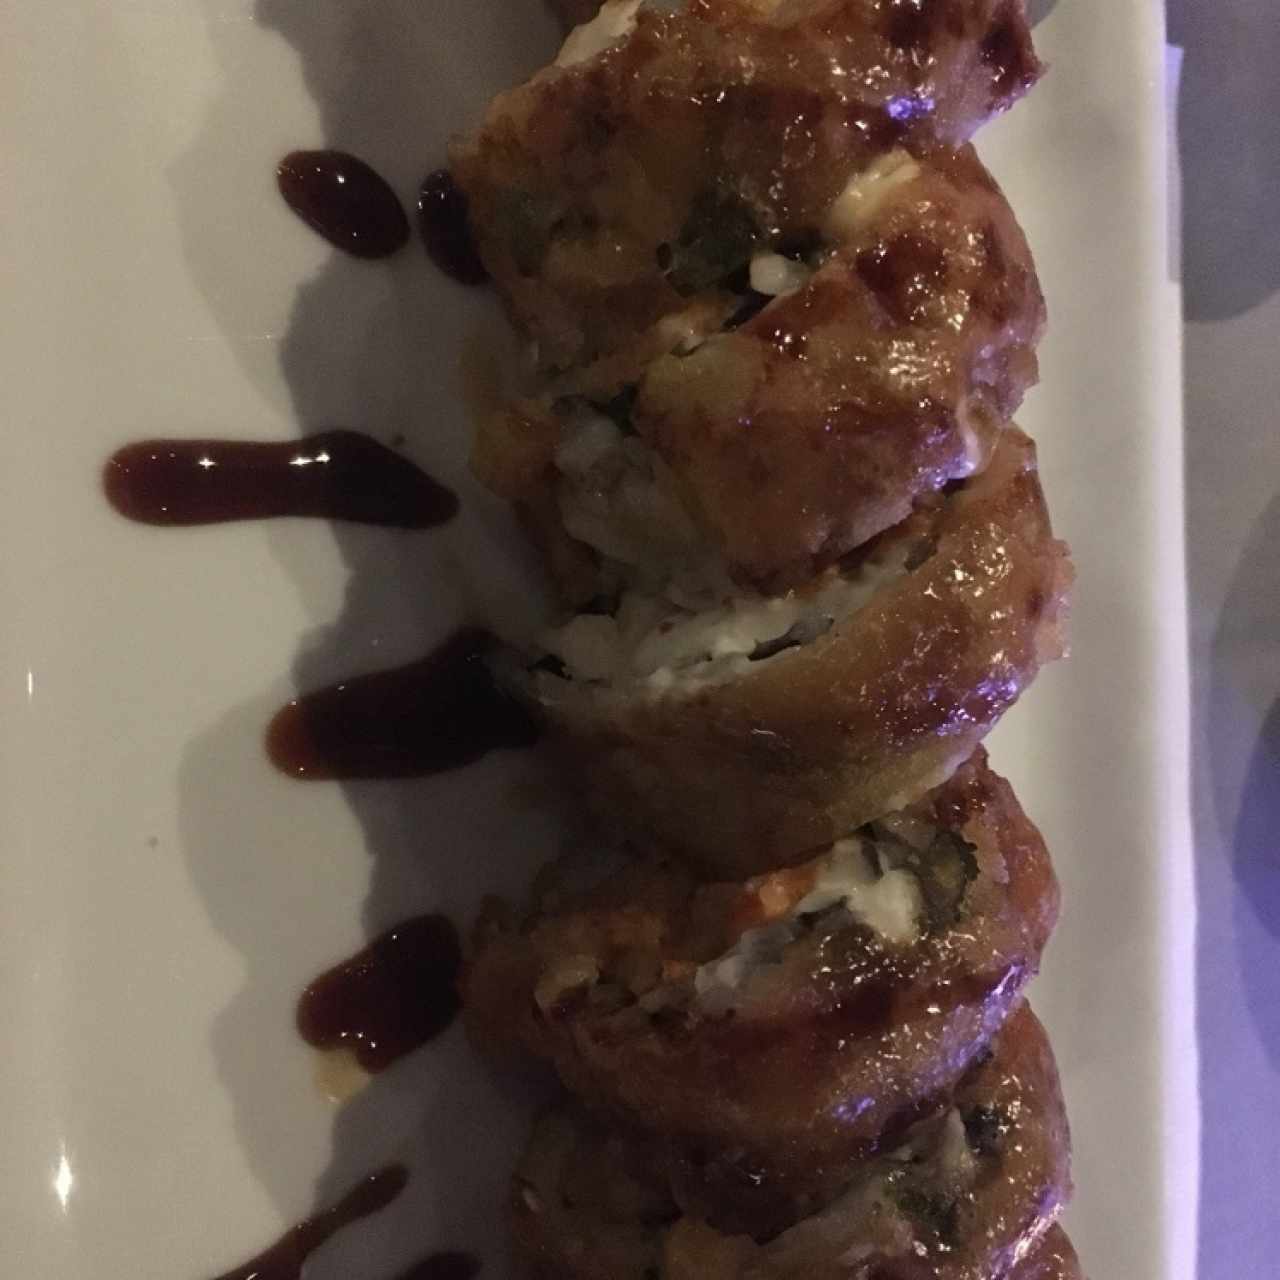 Sushi rolls/Makis - Lobster roll